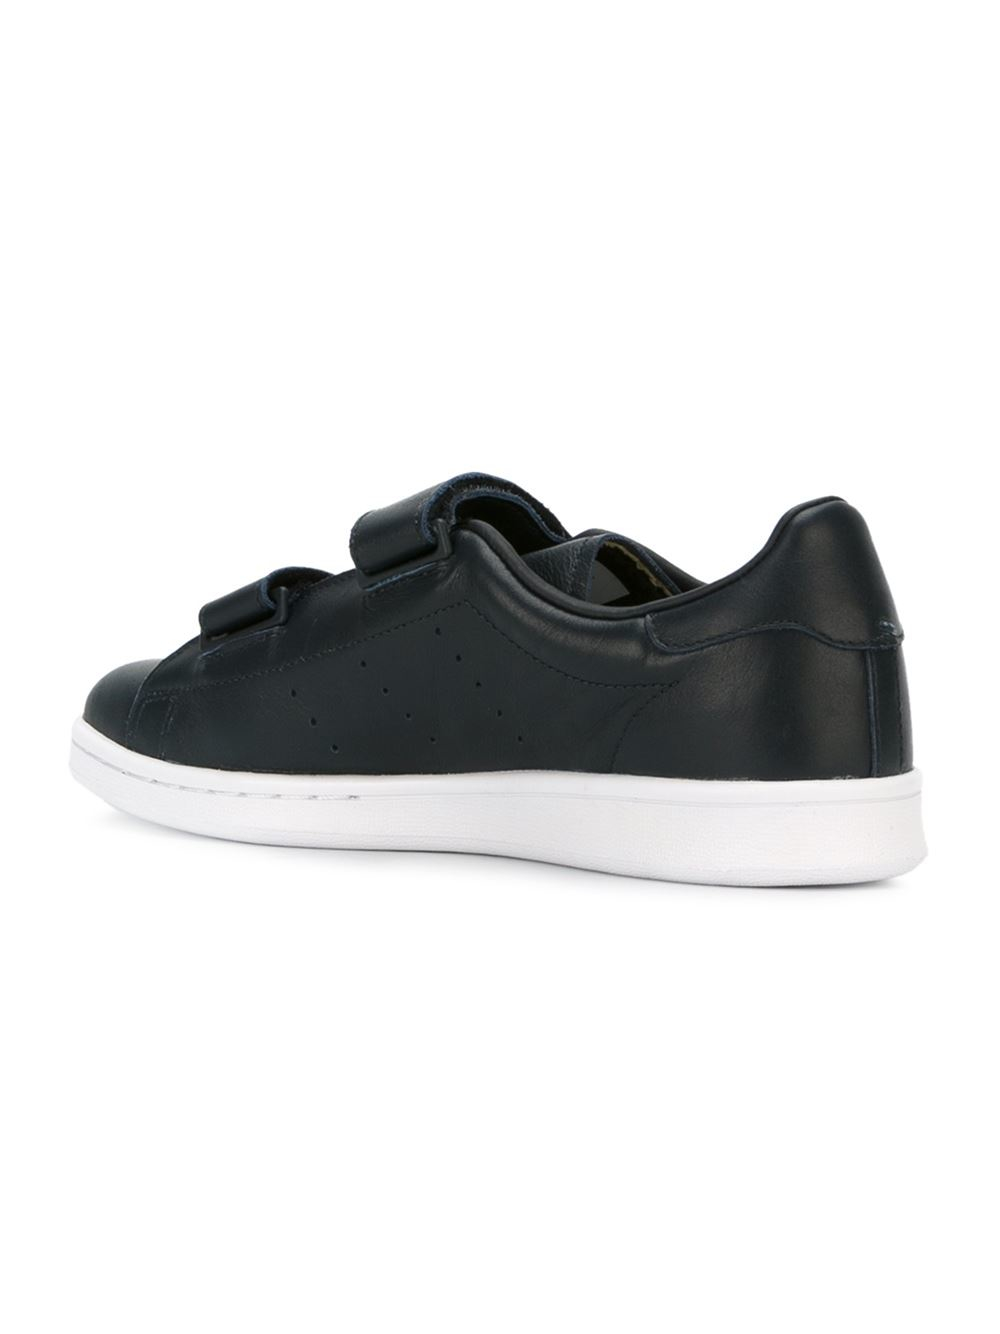 Lyst - Adidas Originals Hyke Velcro Strap Sneakers - Men - Leather ...